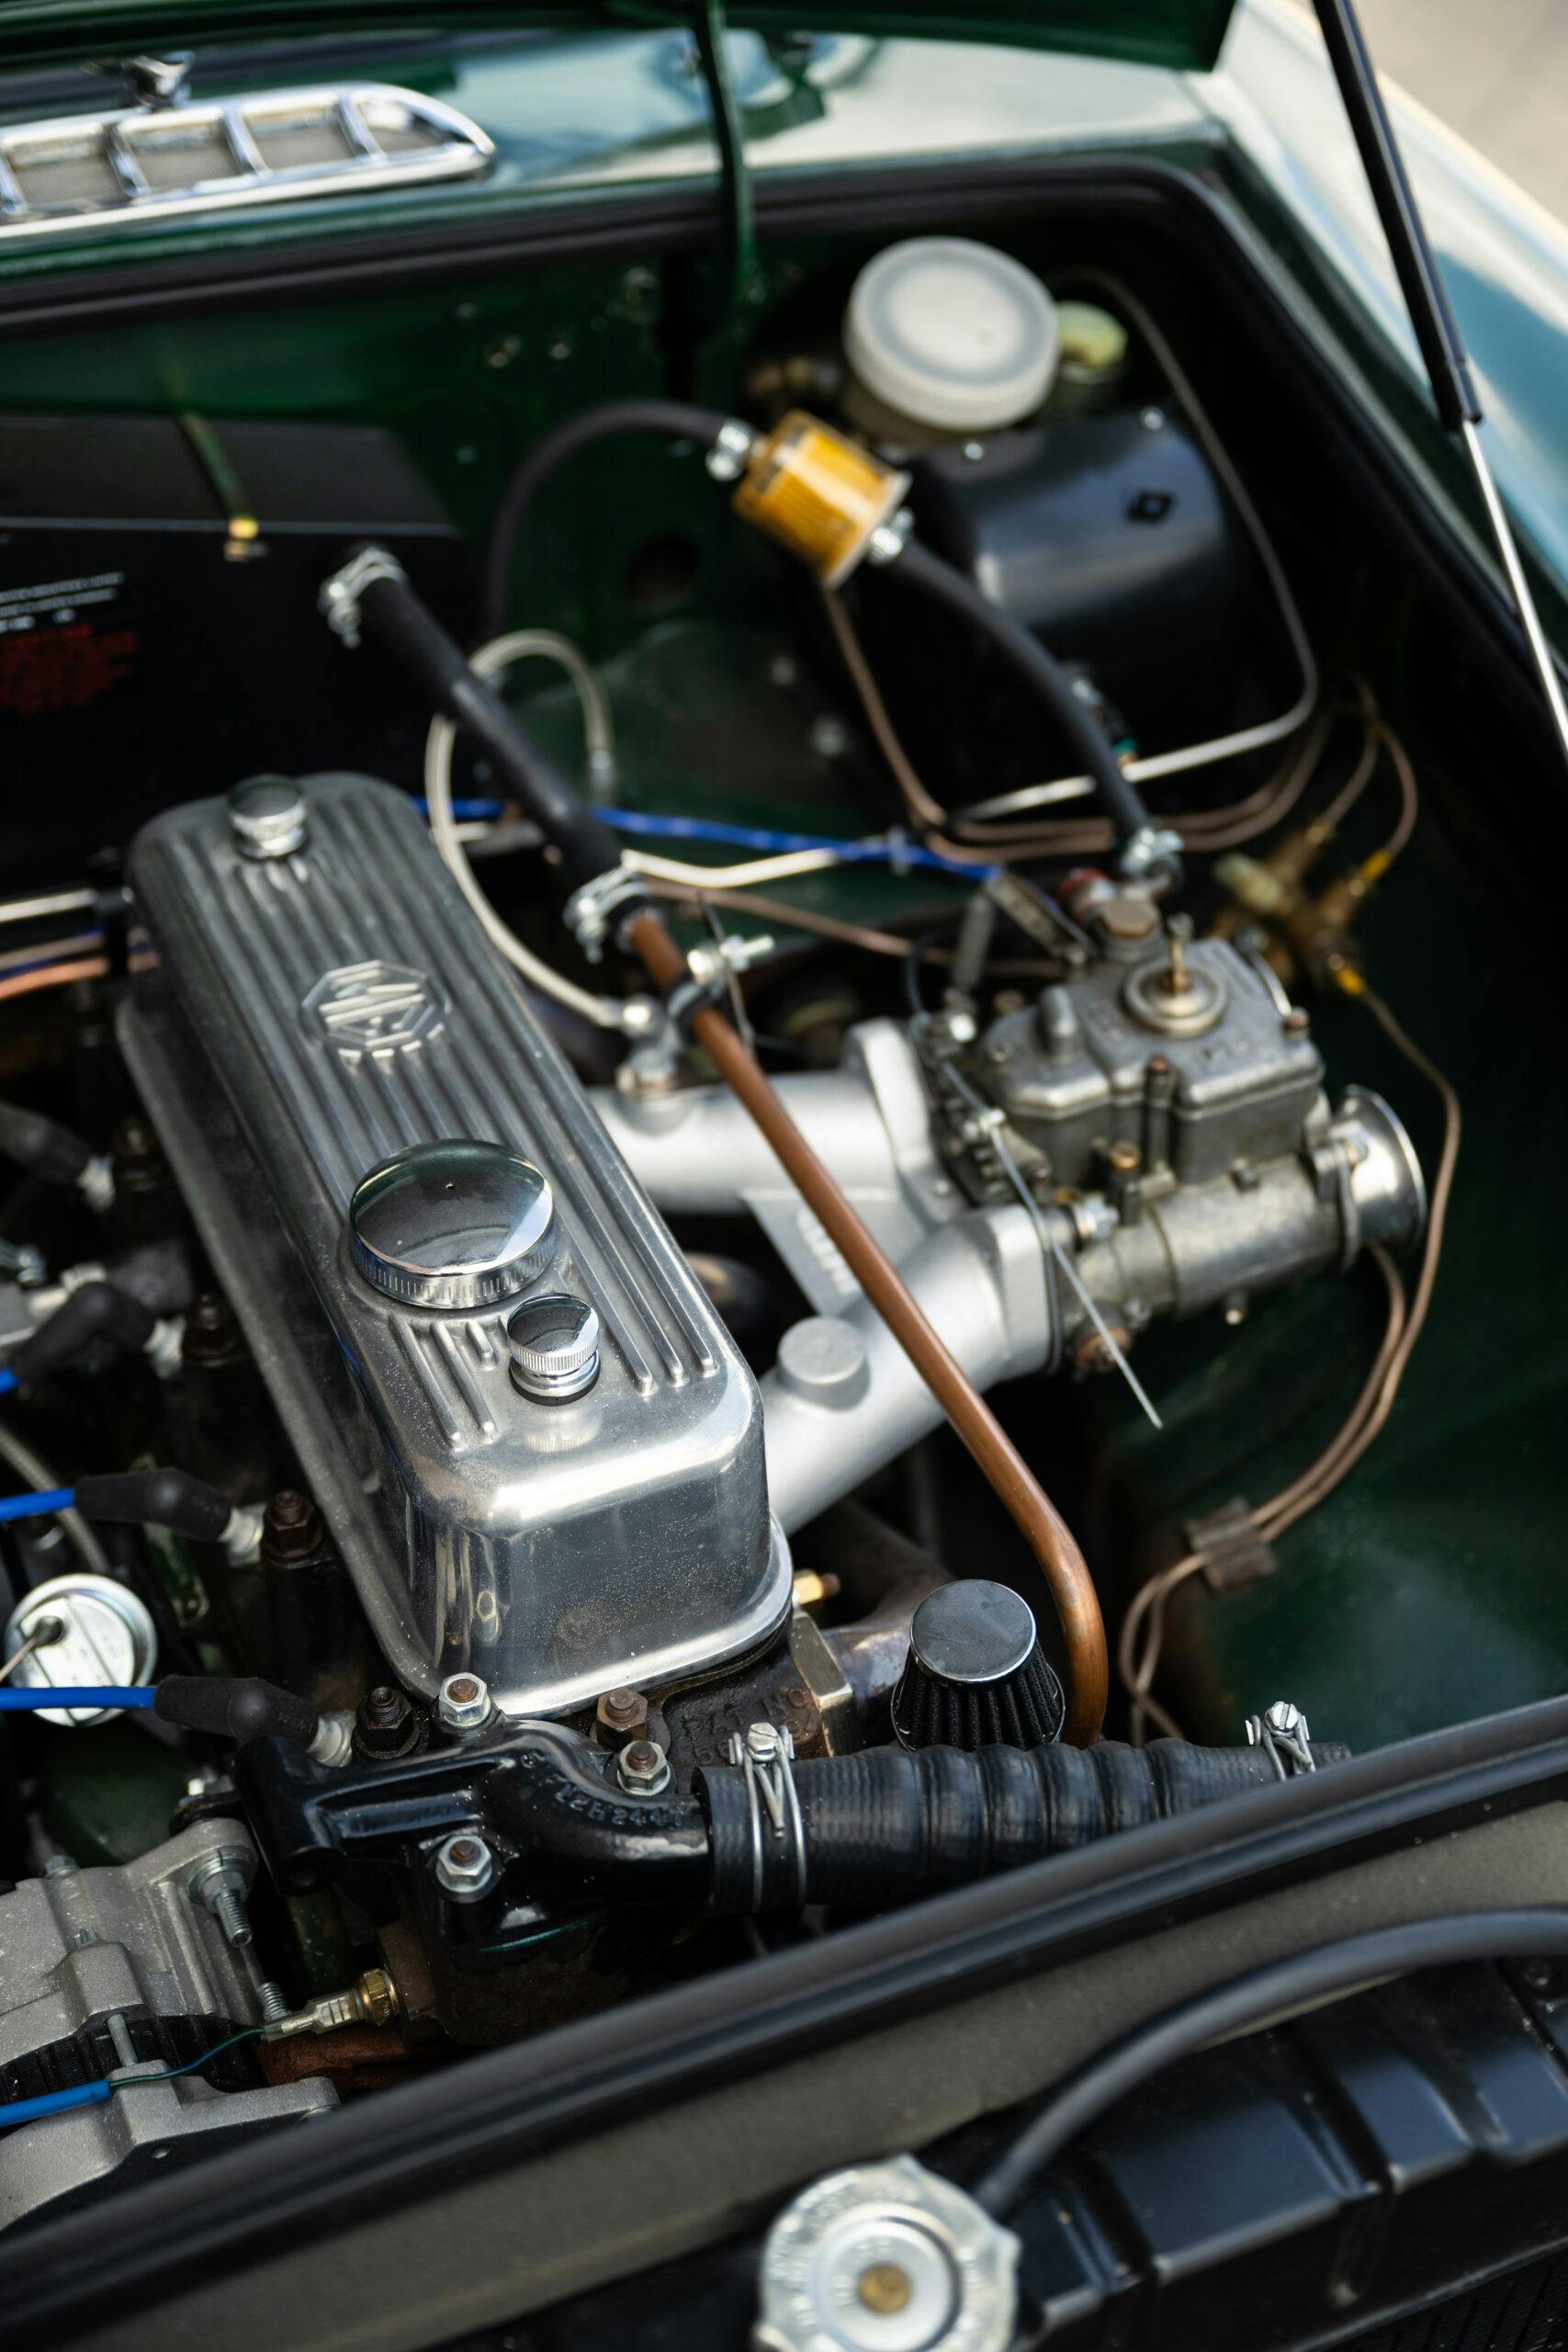 1970 MG MGB engine